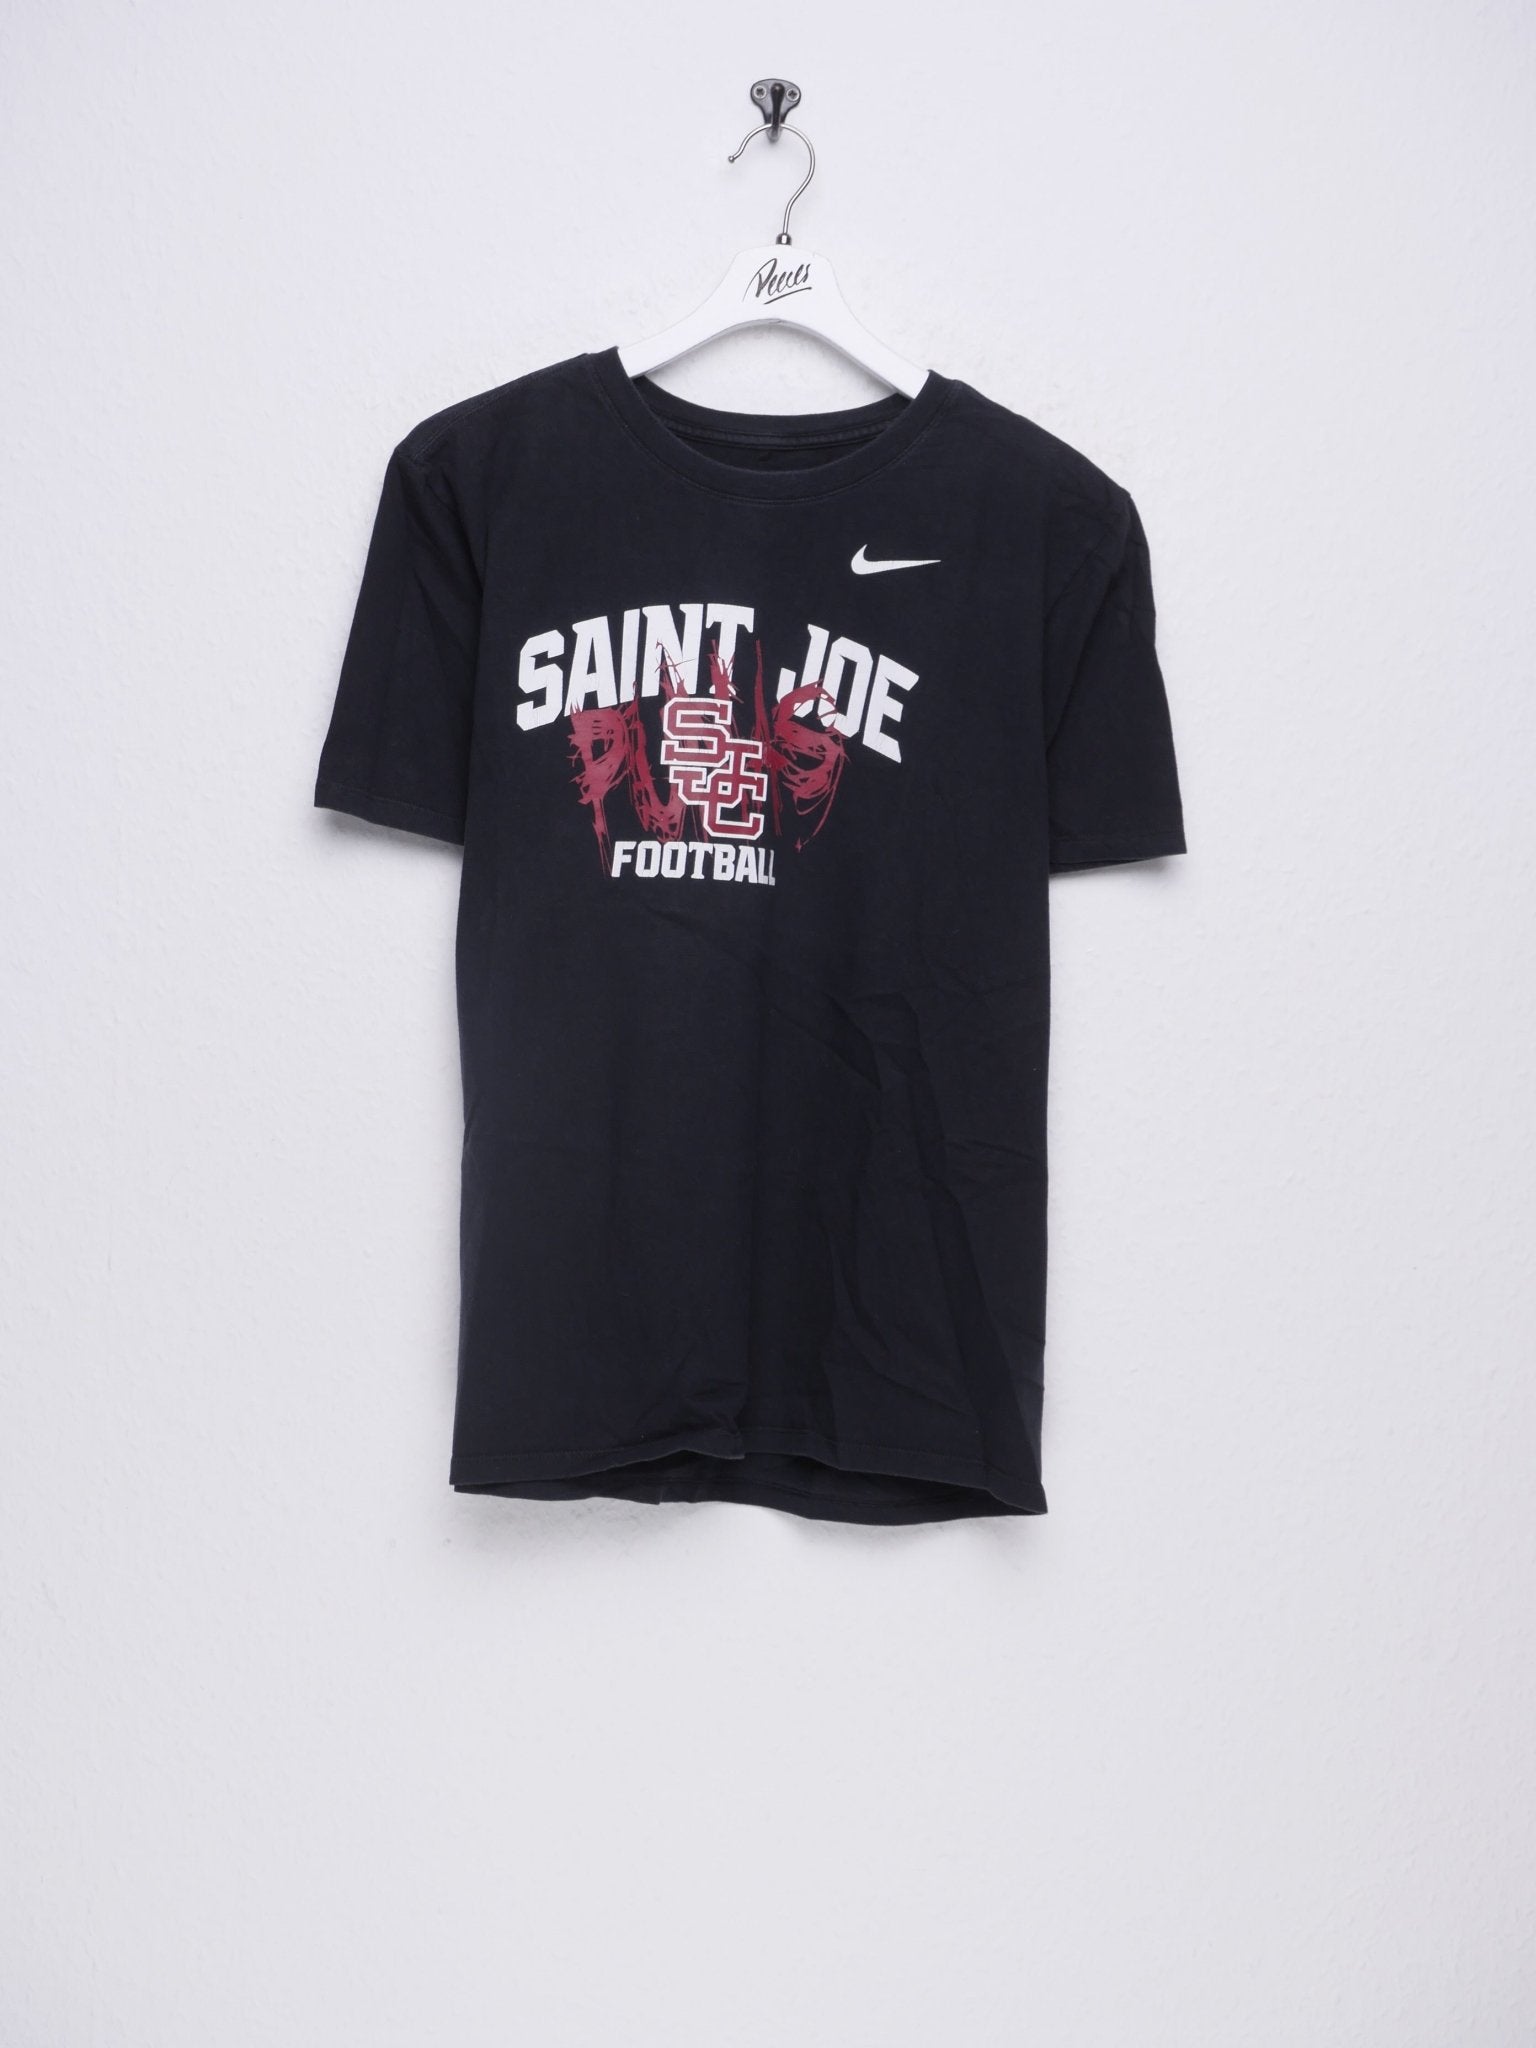 Nike printed Graphic Vintage Shirt - Peeces